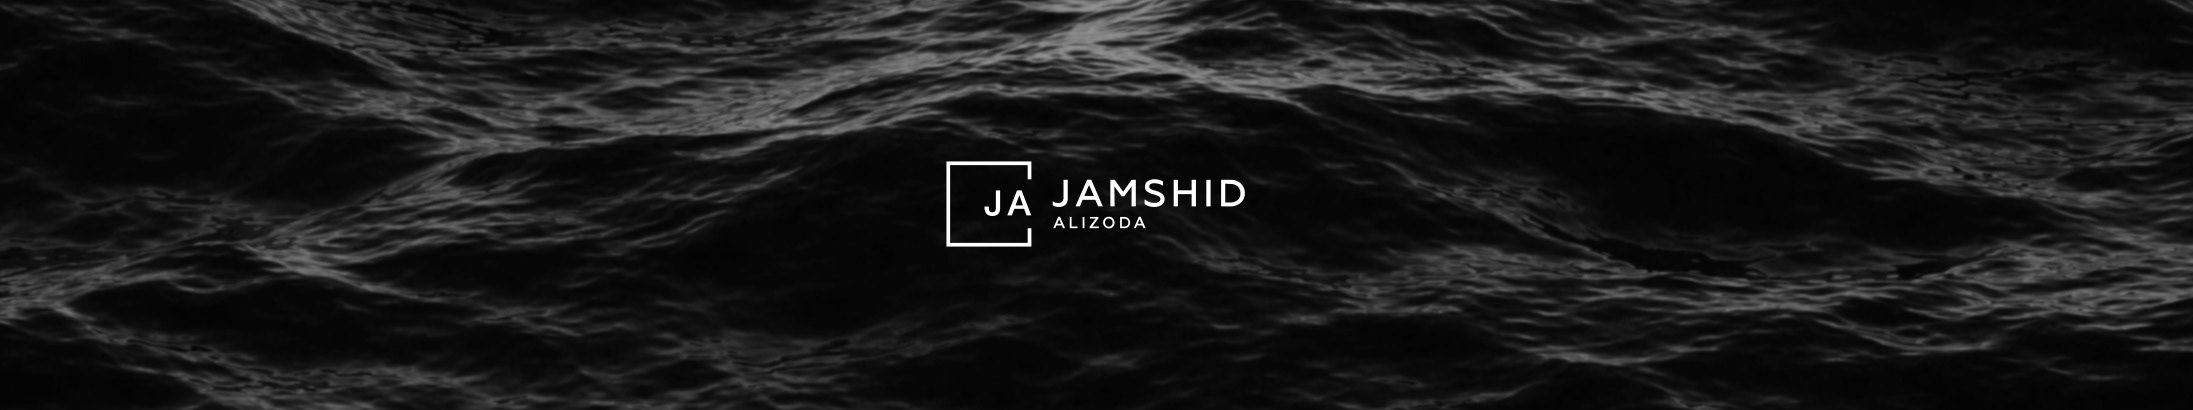 Jamshid Alizoda's profile banner